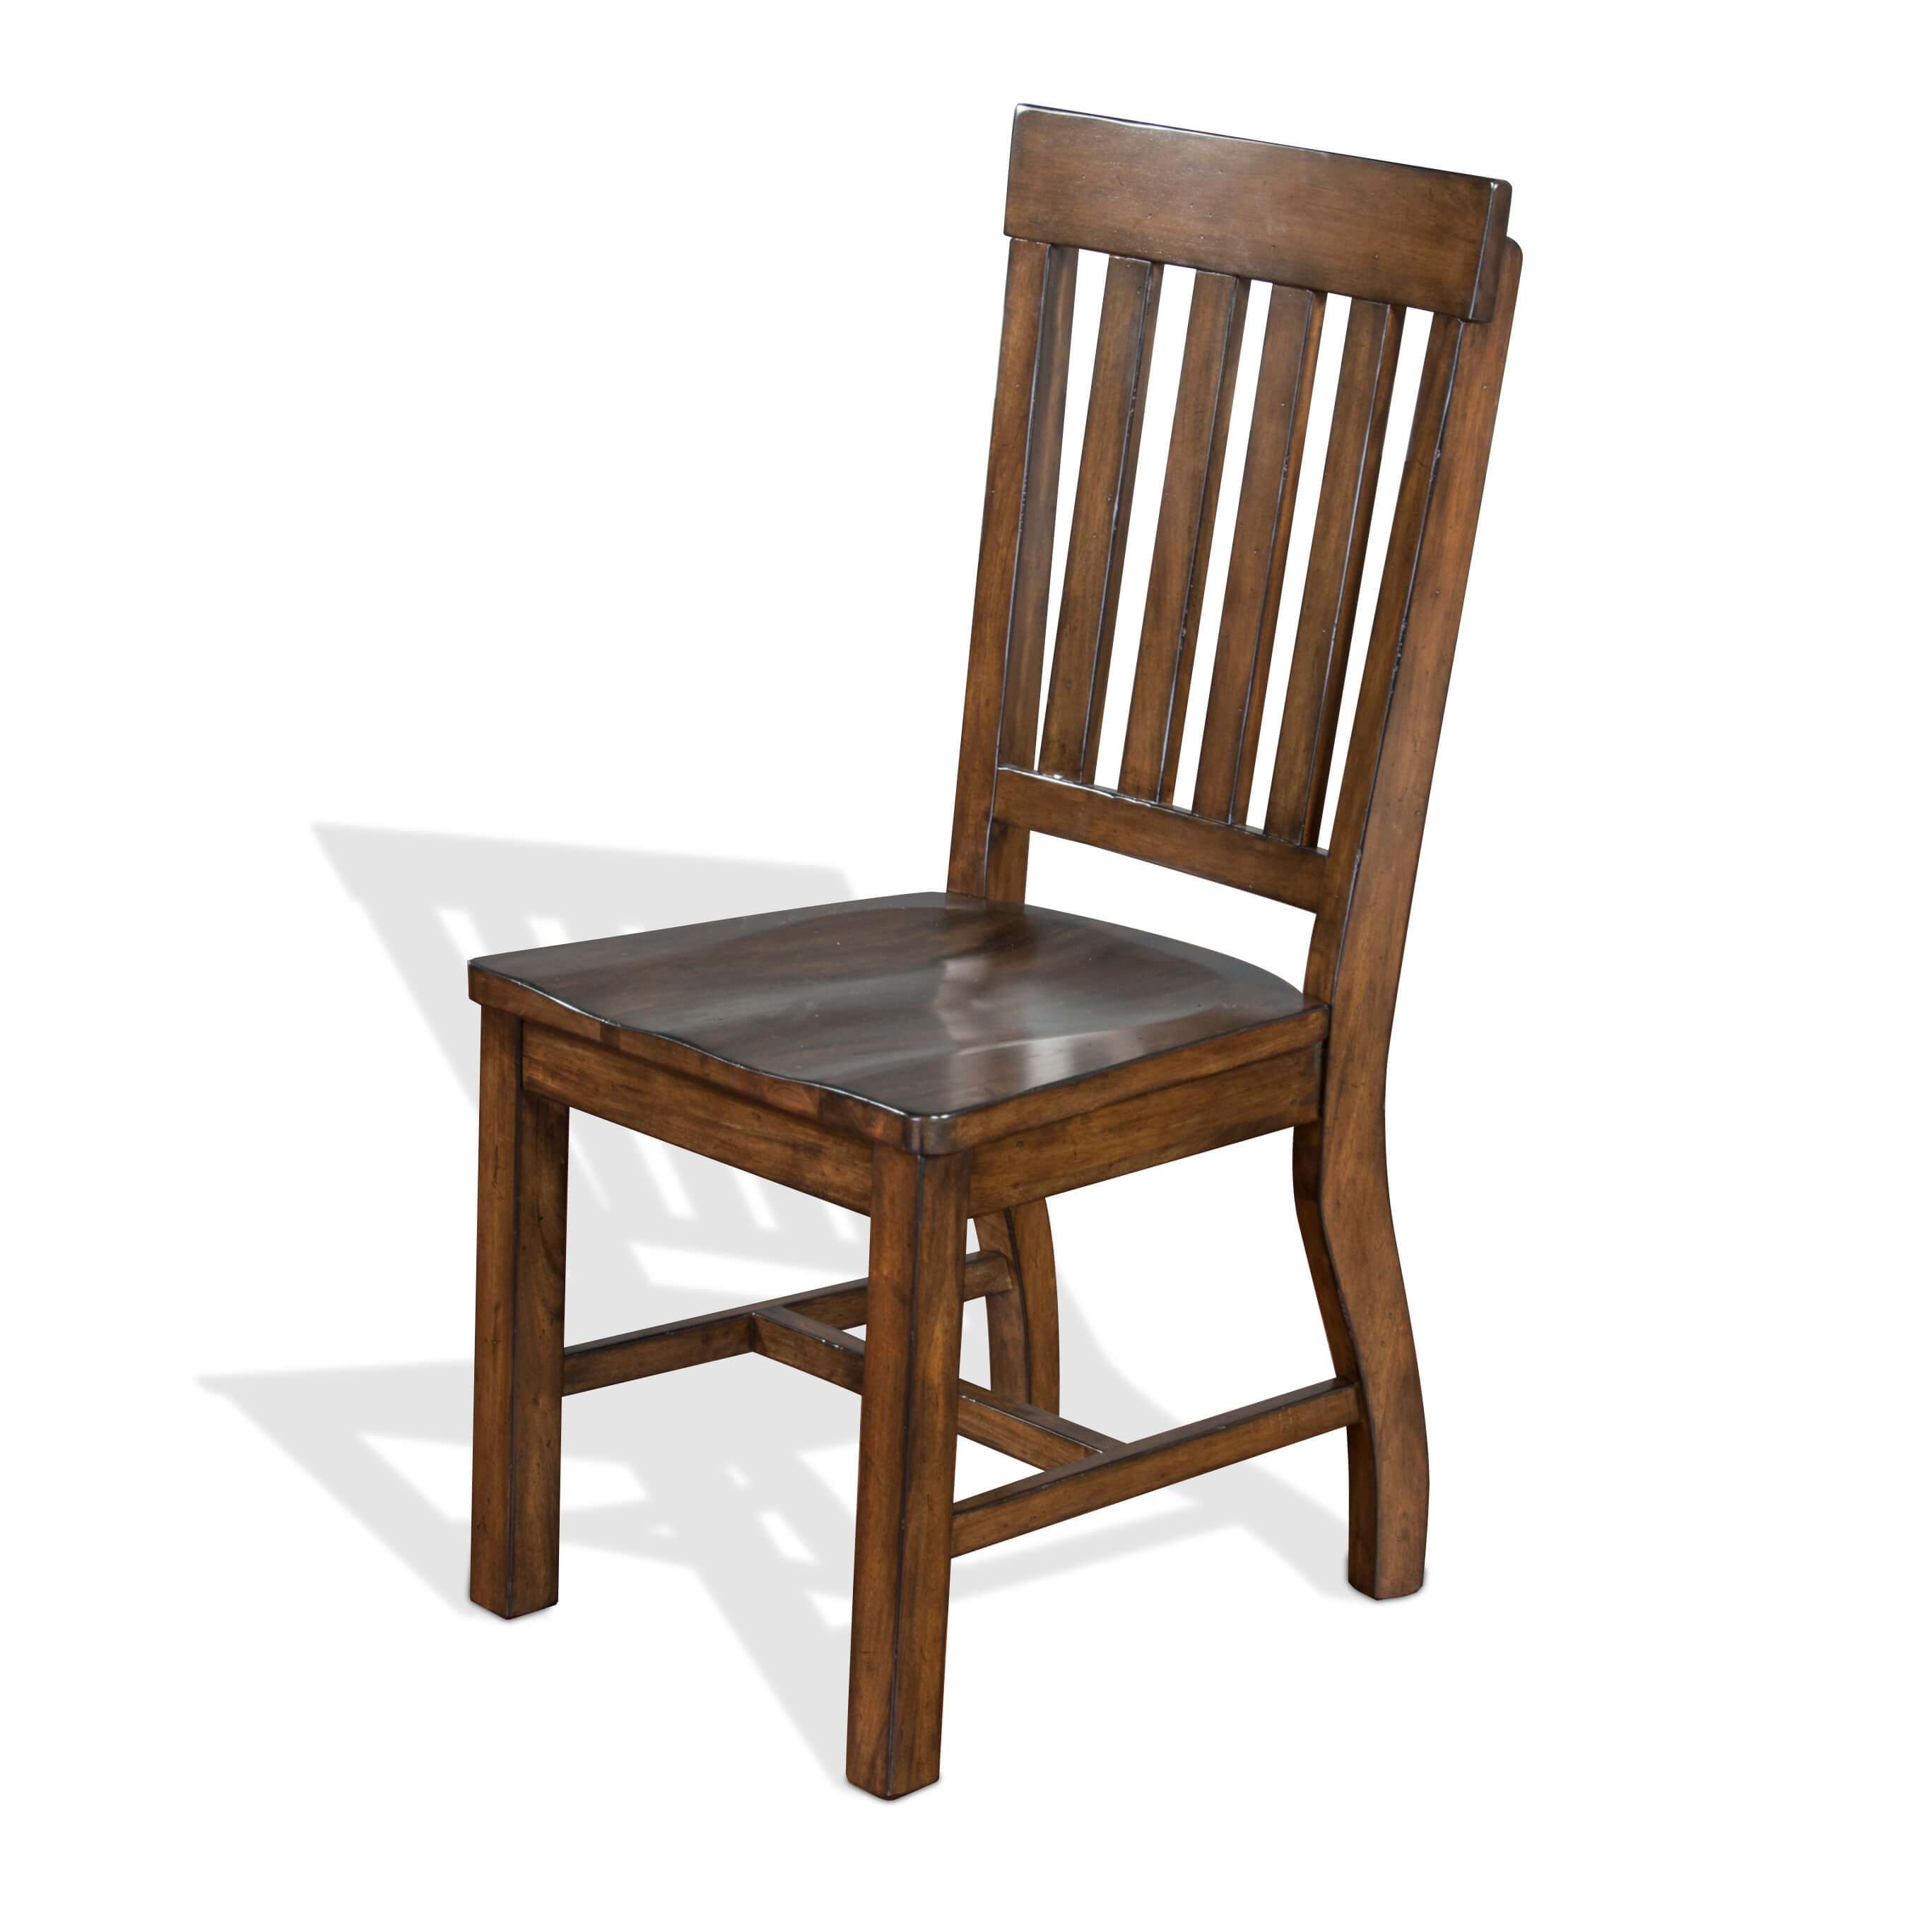 Table Chair For Restaurant - designtaecho